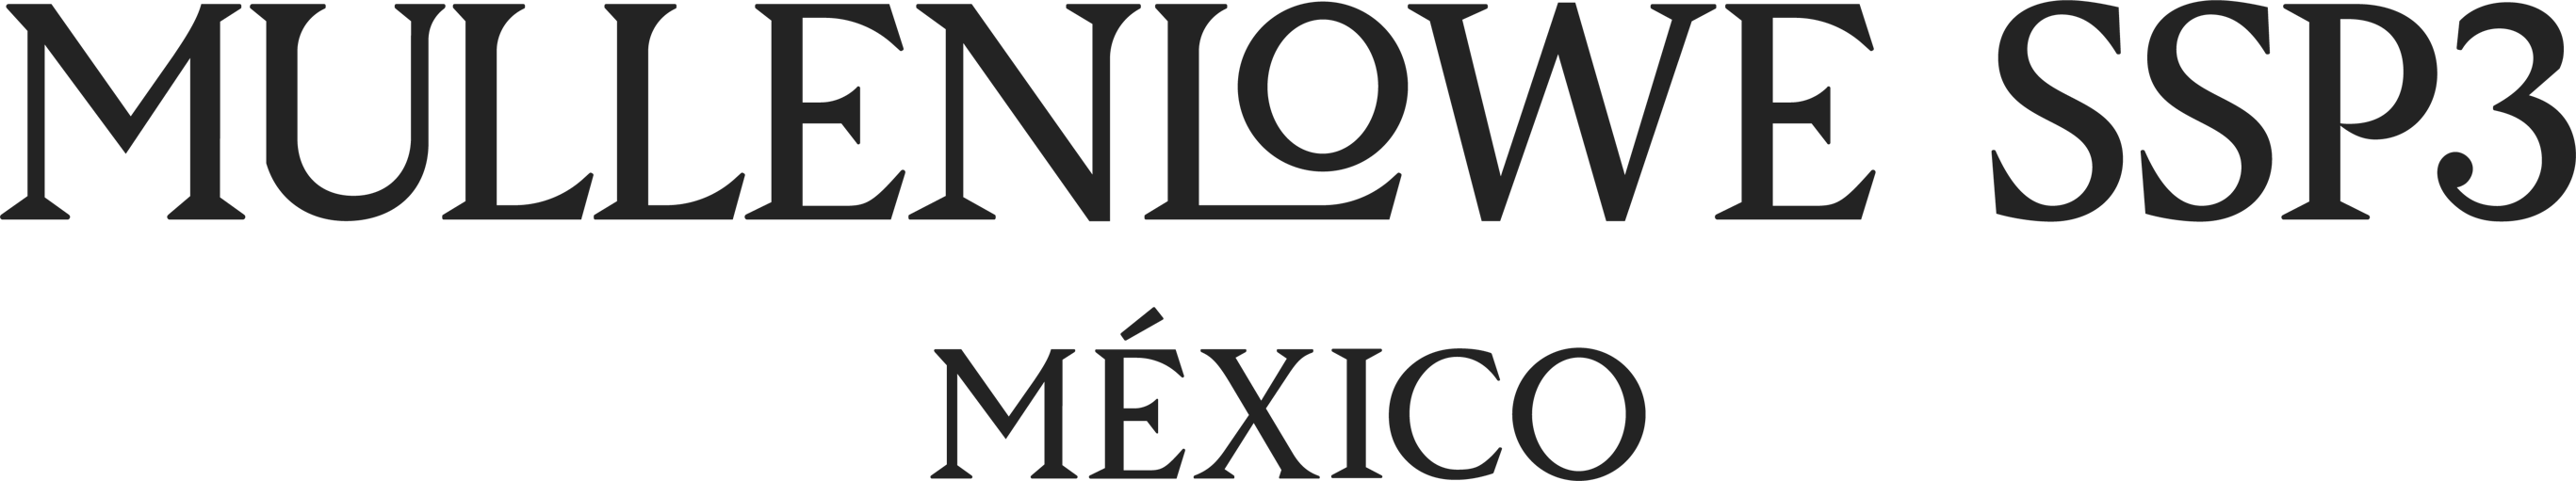 MullenLowe SSP3 México logo